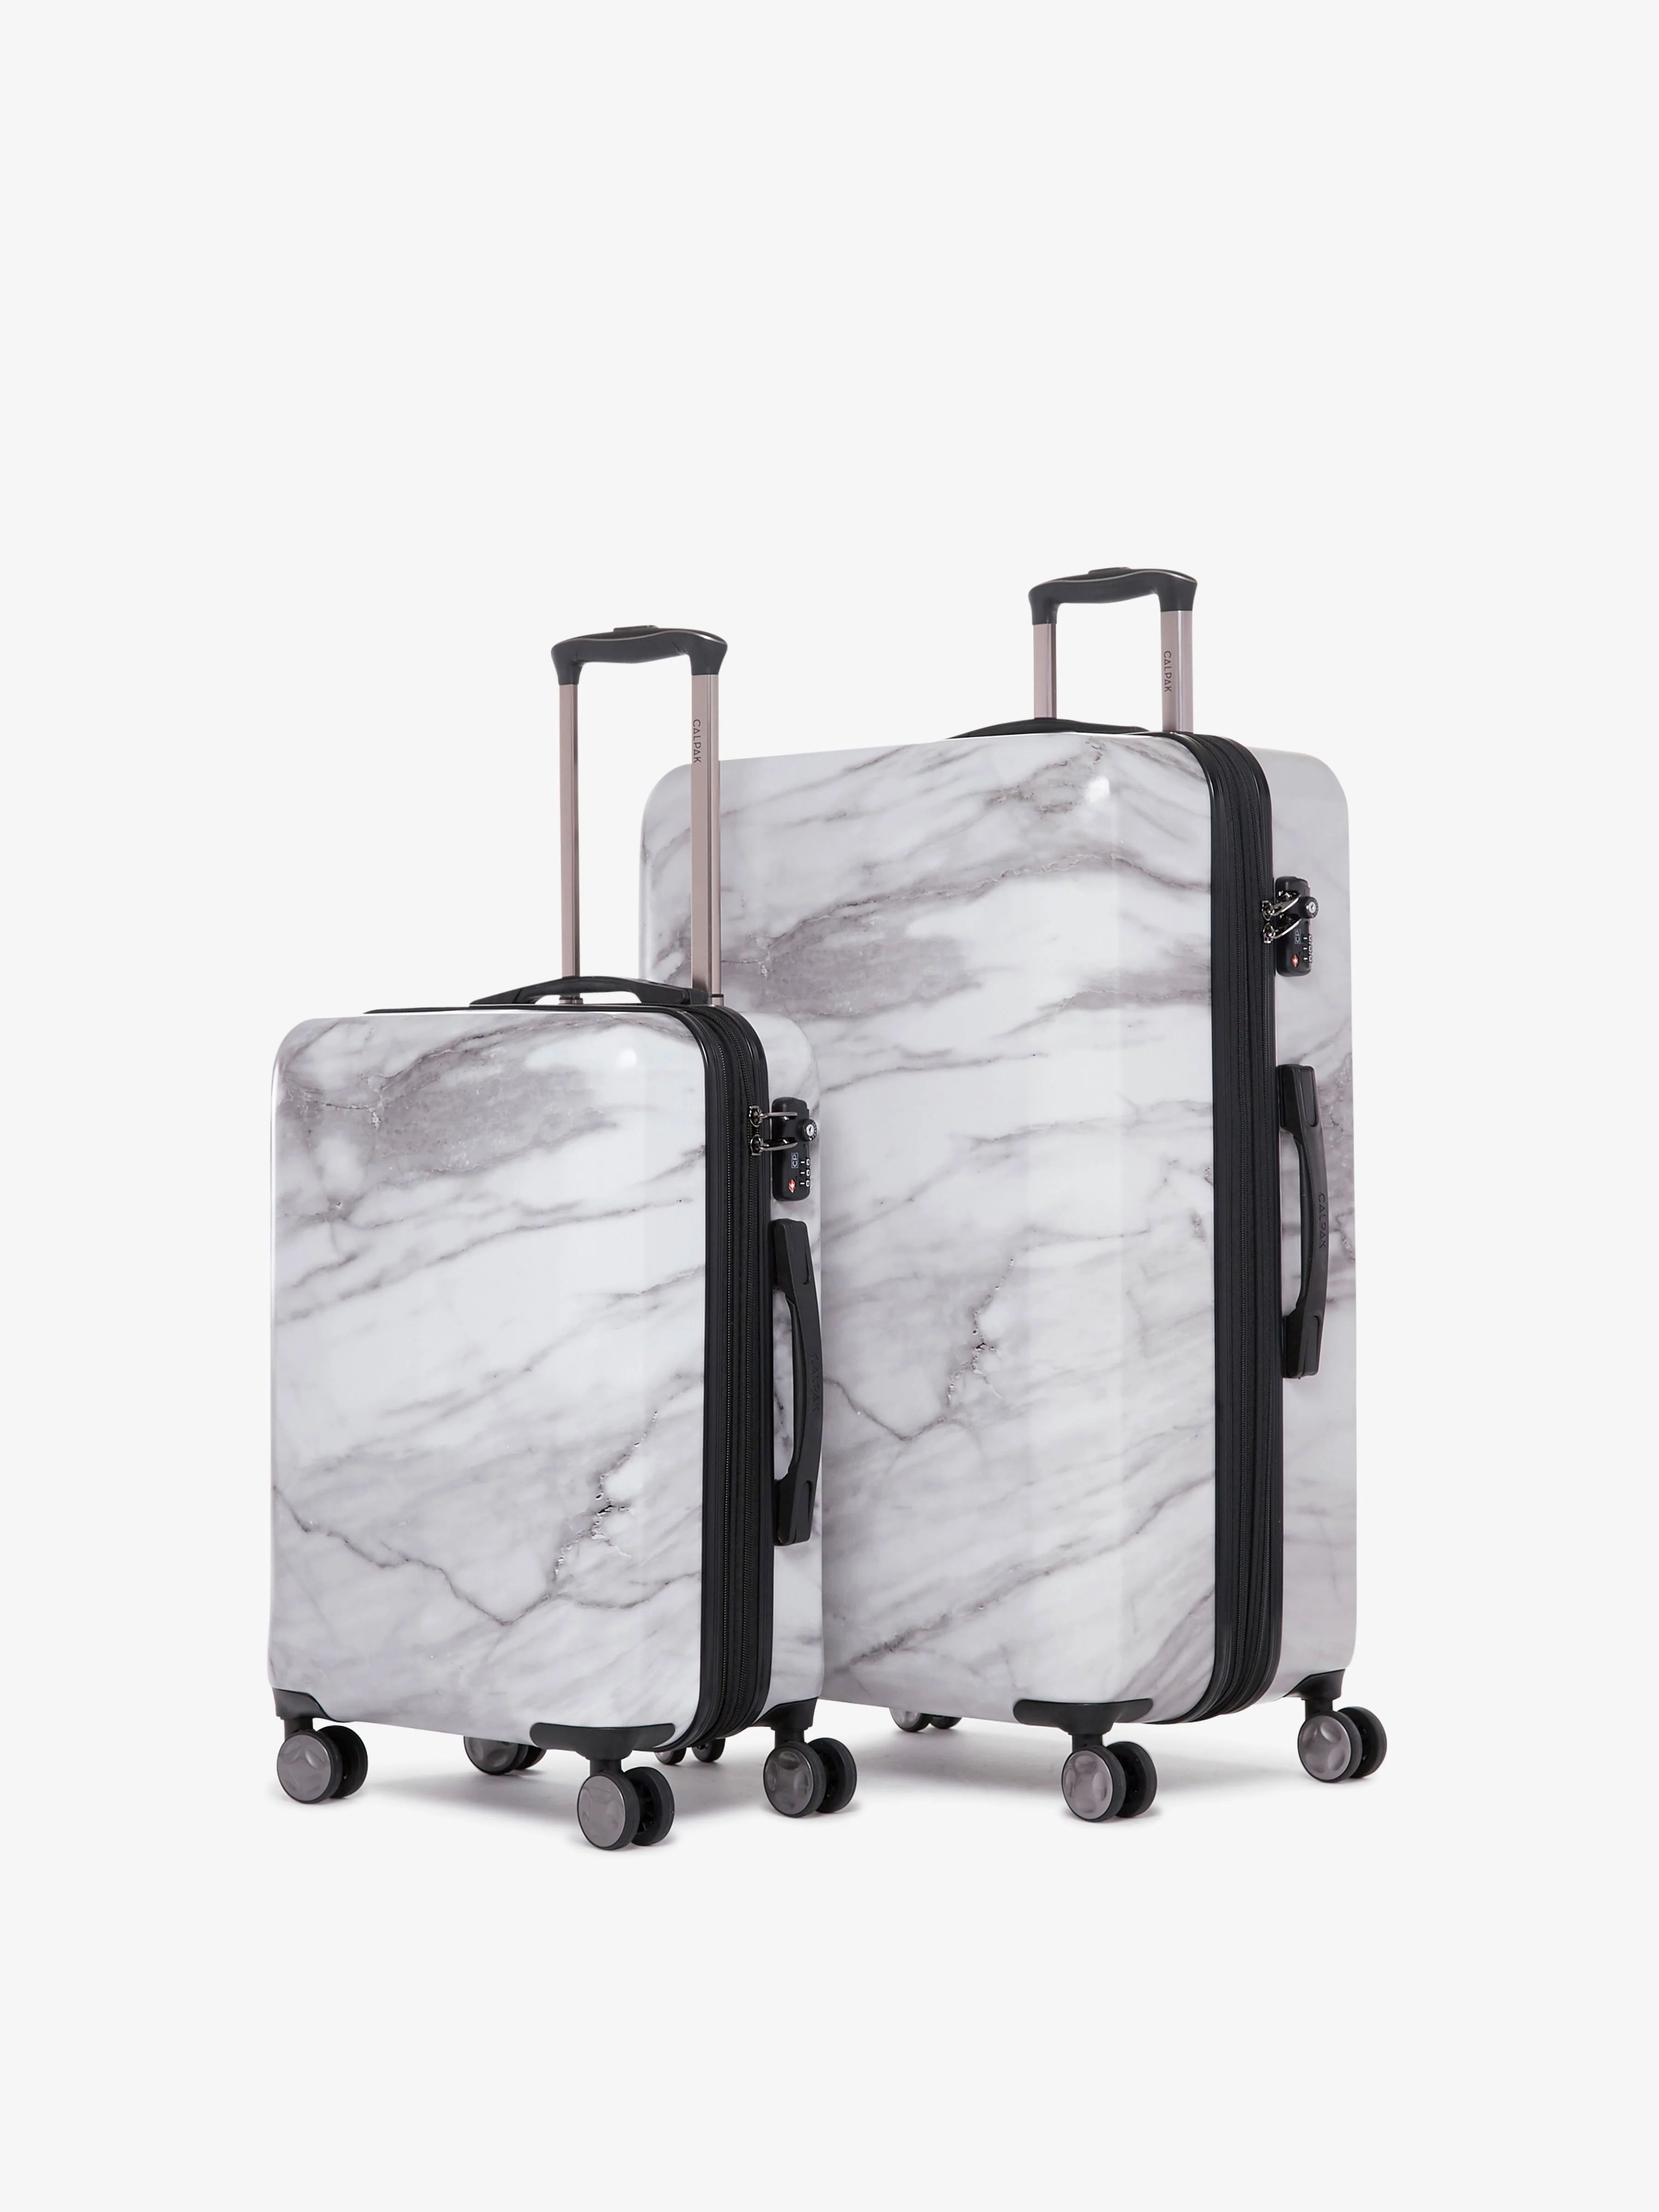 Astyll 2-Piece Luggage Set | CALPAK | CALPAK Travel